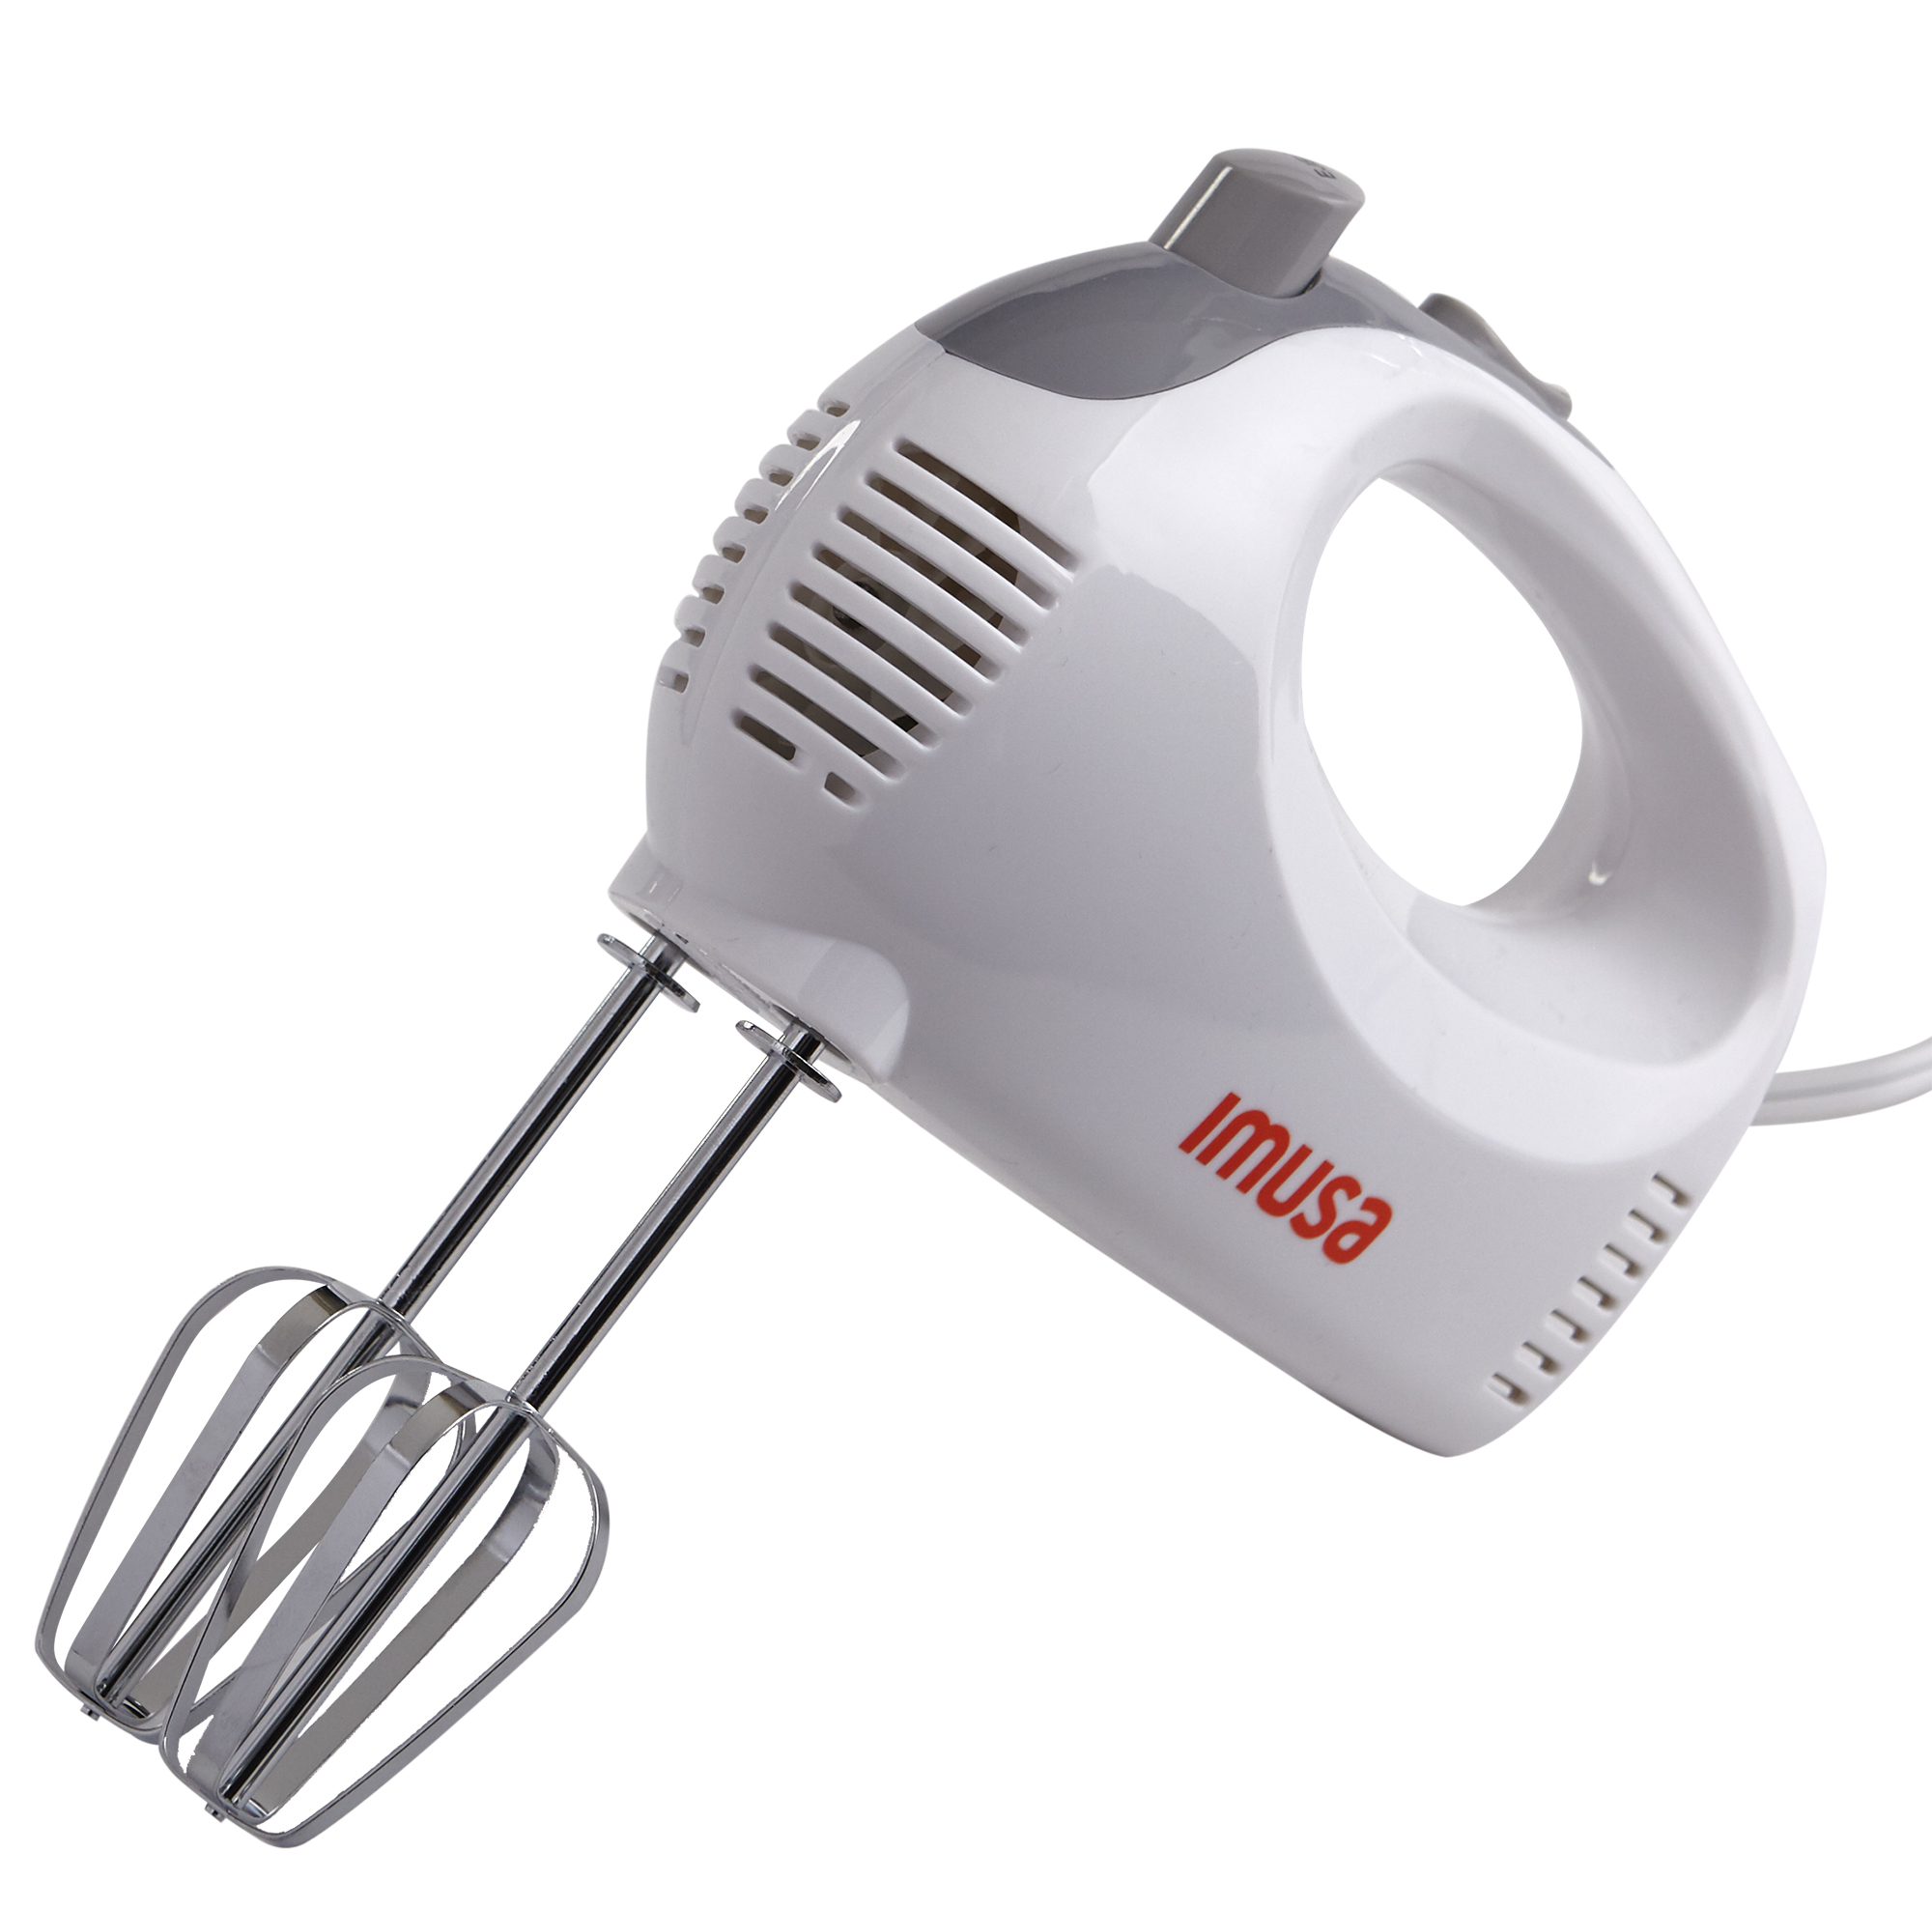 IMUSA IMUSA Electric Hand Mixer 5 Speed 150 Watts, White - IMUSA